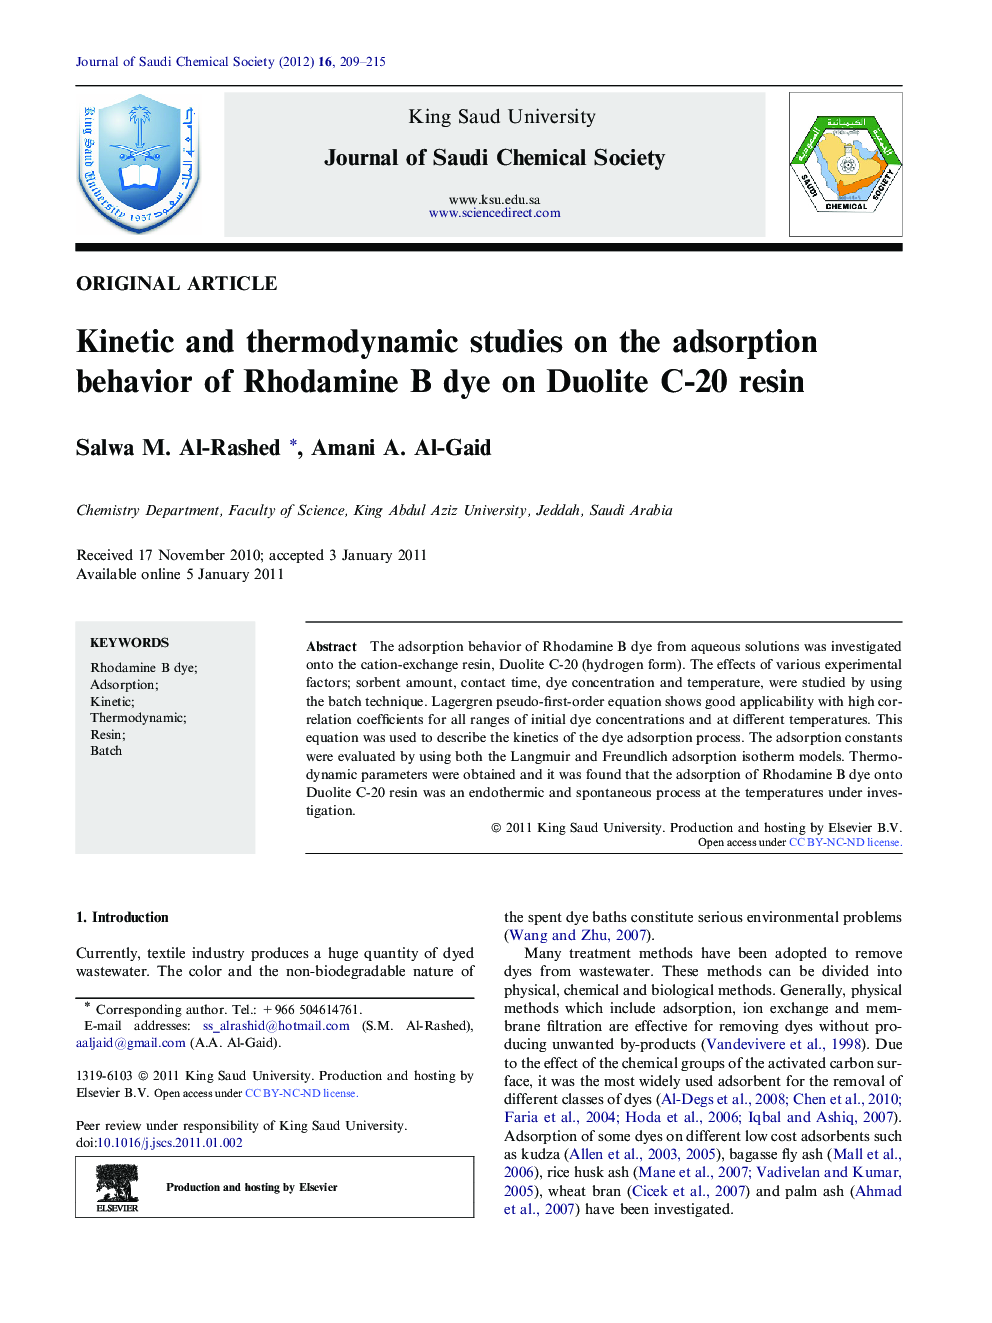 Kinetic and thermodynamic studies on the adsorption behavior of Rhodamine B dye on Duolite C-20 resin 